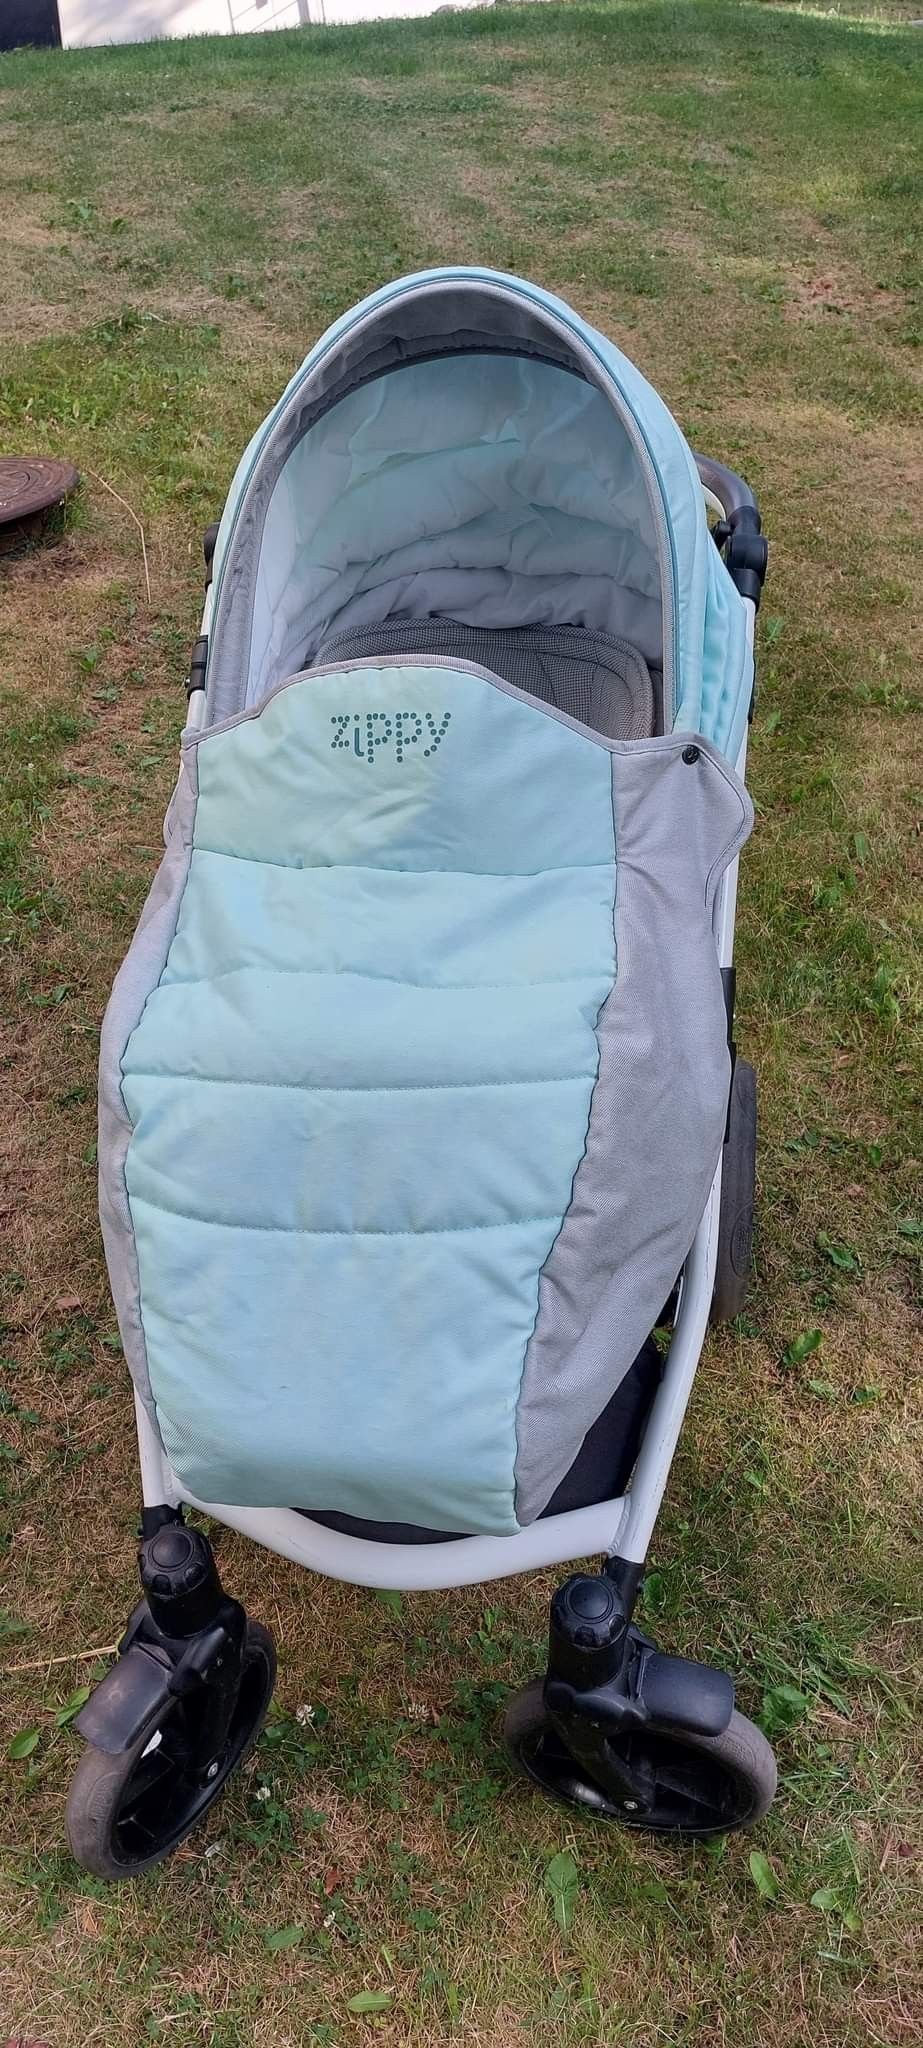 Zippy baby stroller